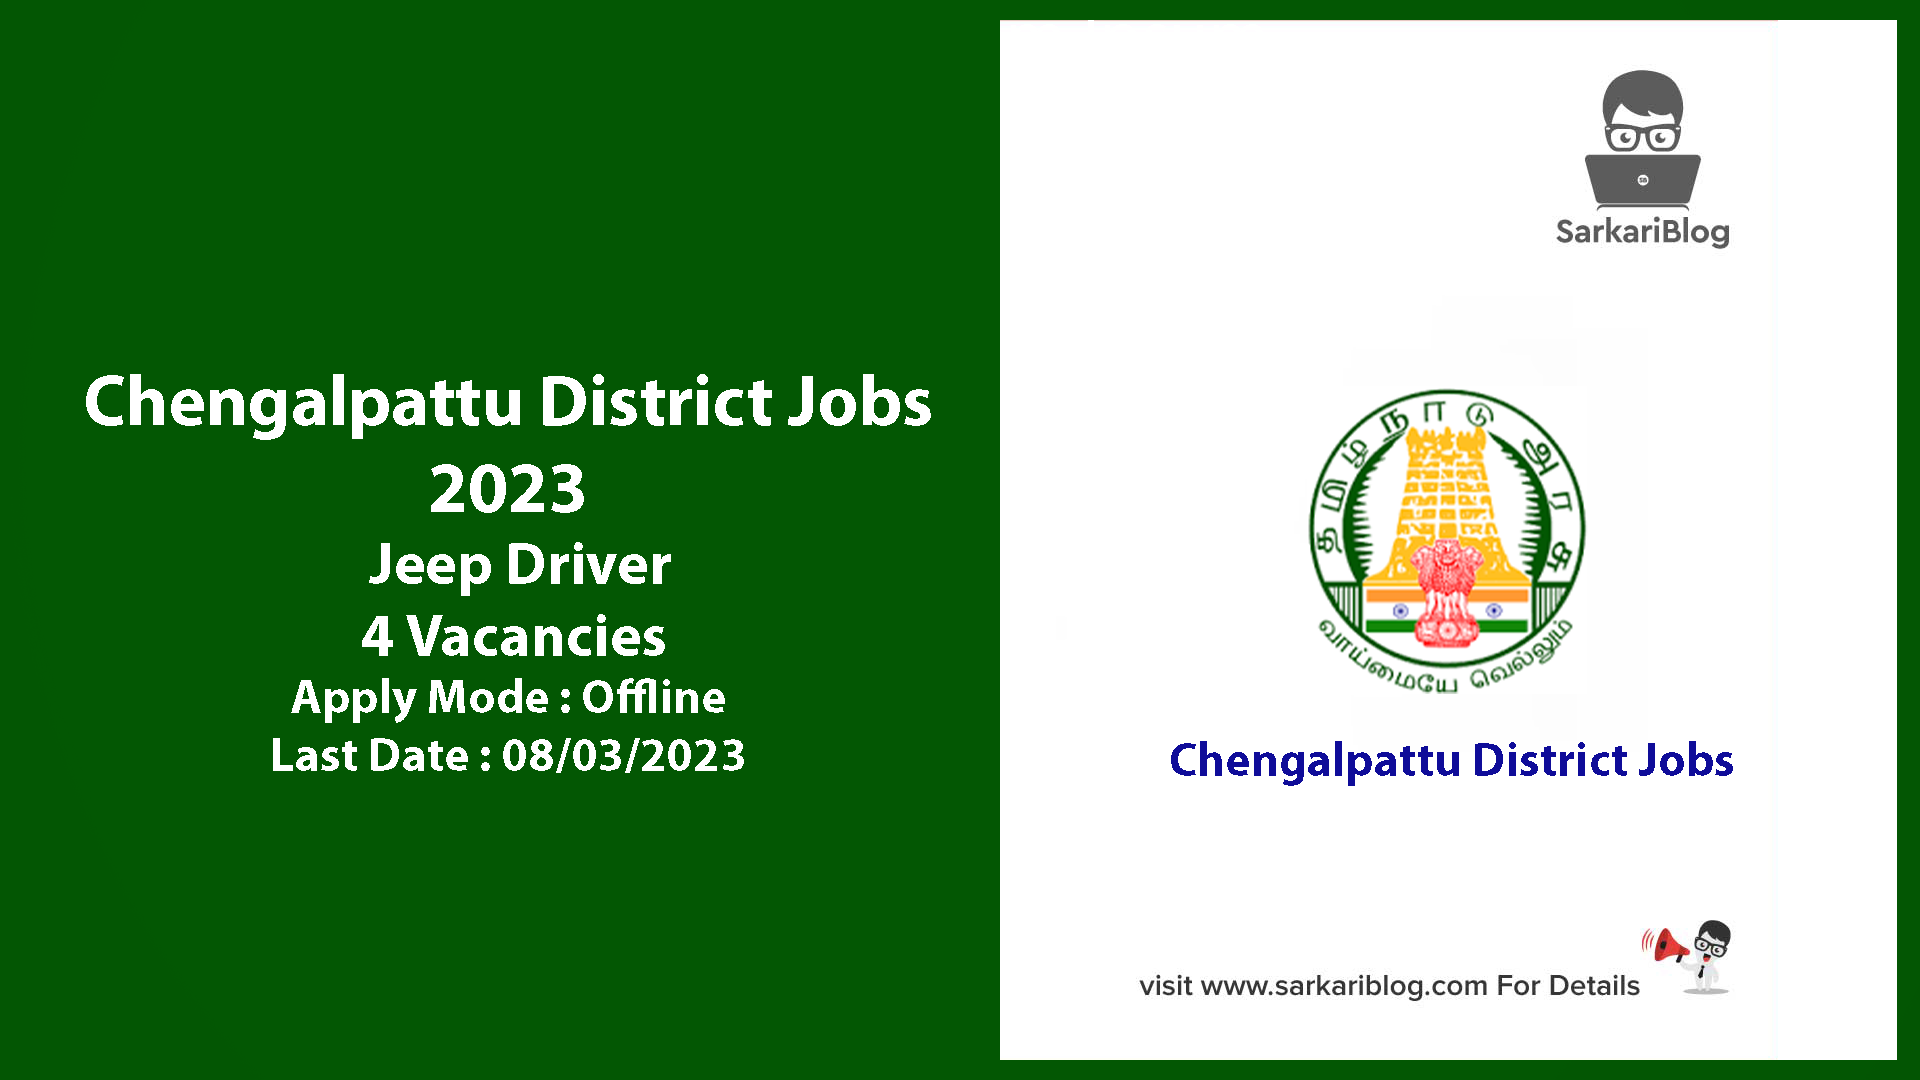 Chengalpattu District Jobs Recruitment 2023